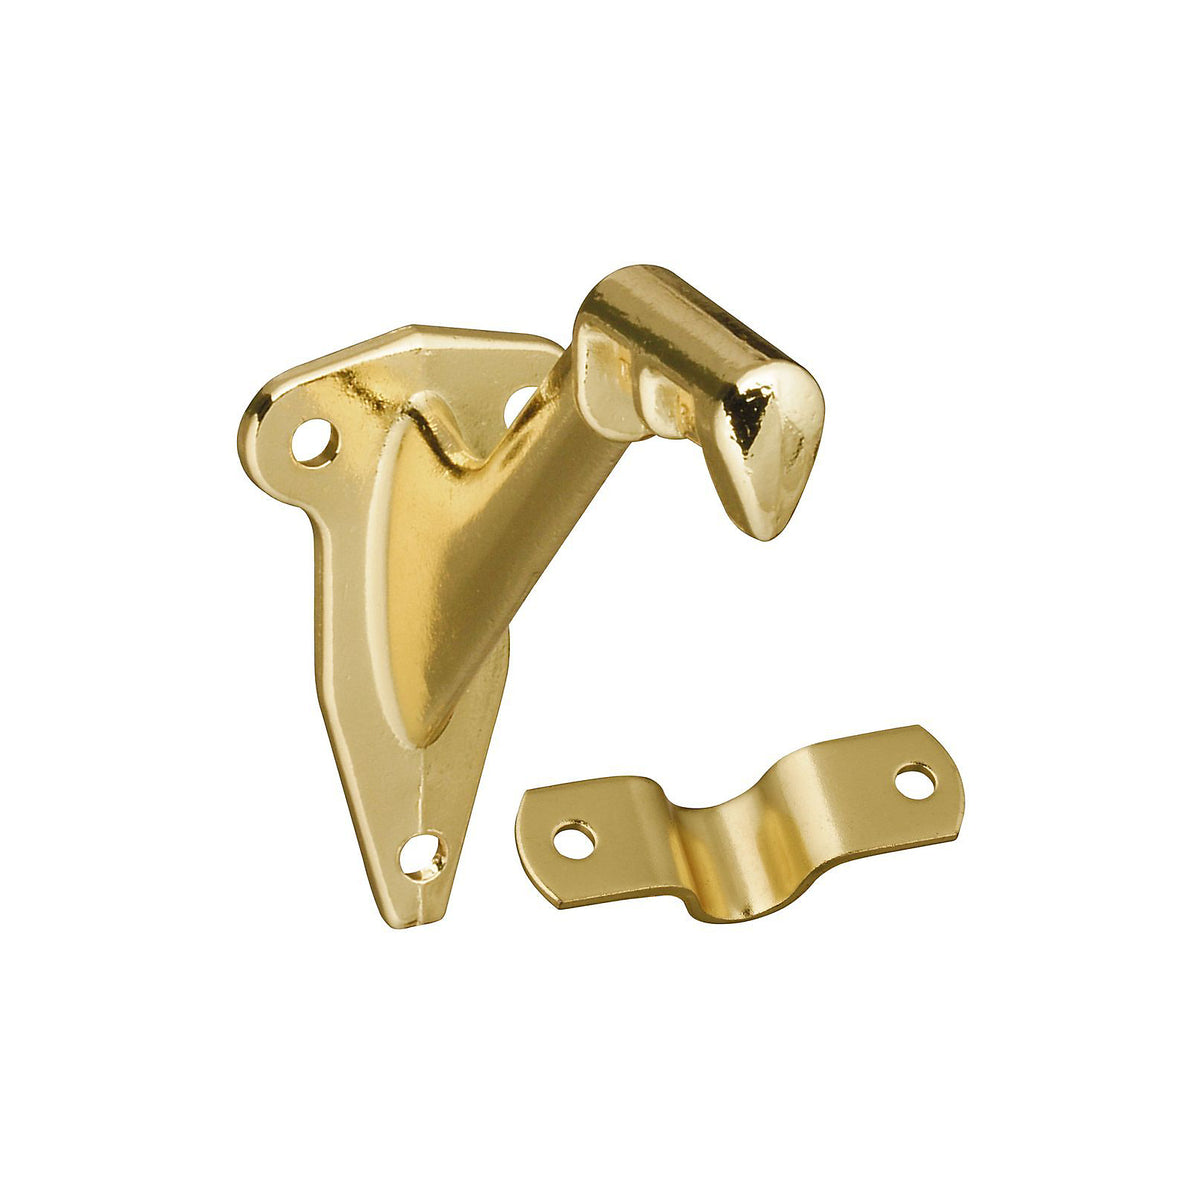 Stanley 830131 Handrail Bracket, Polished Brass